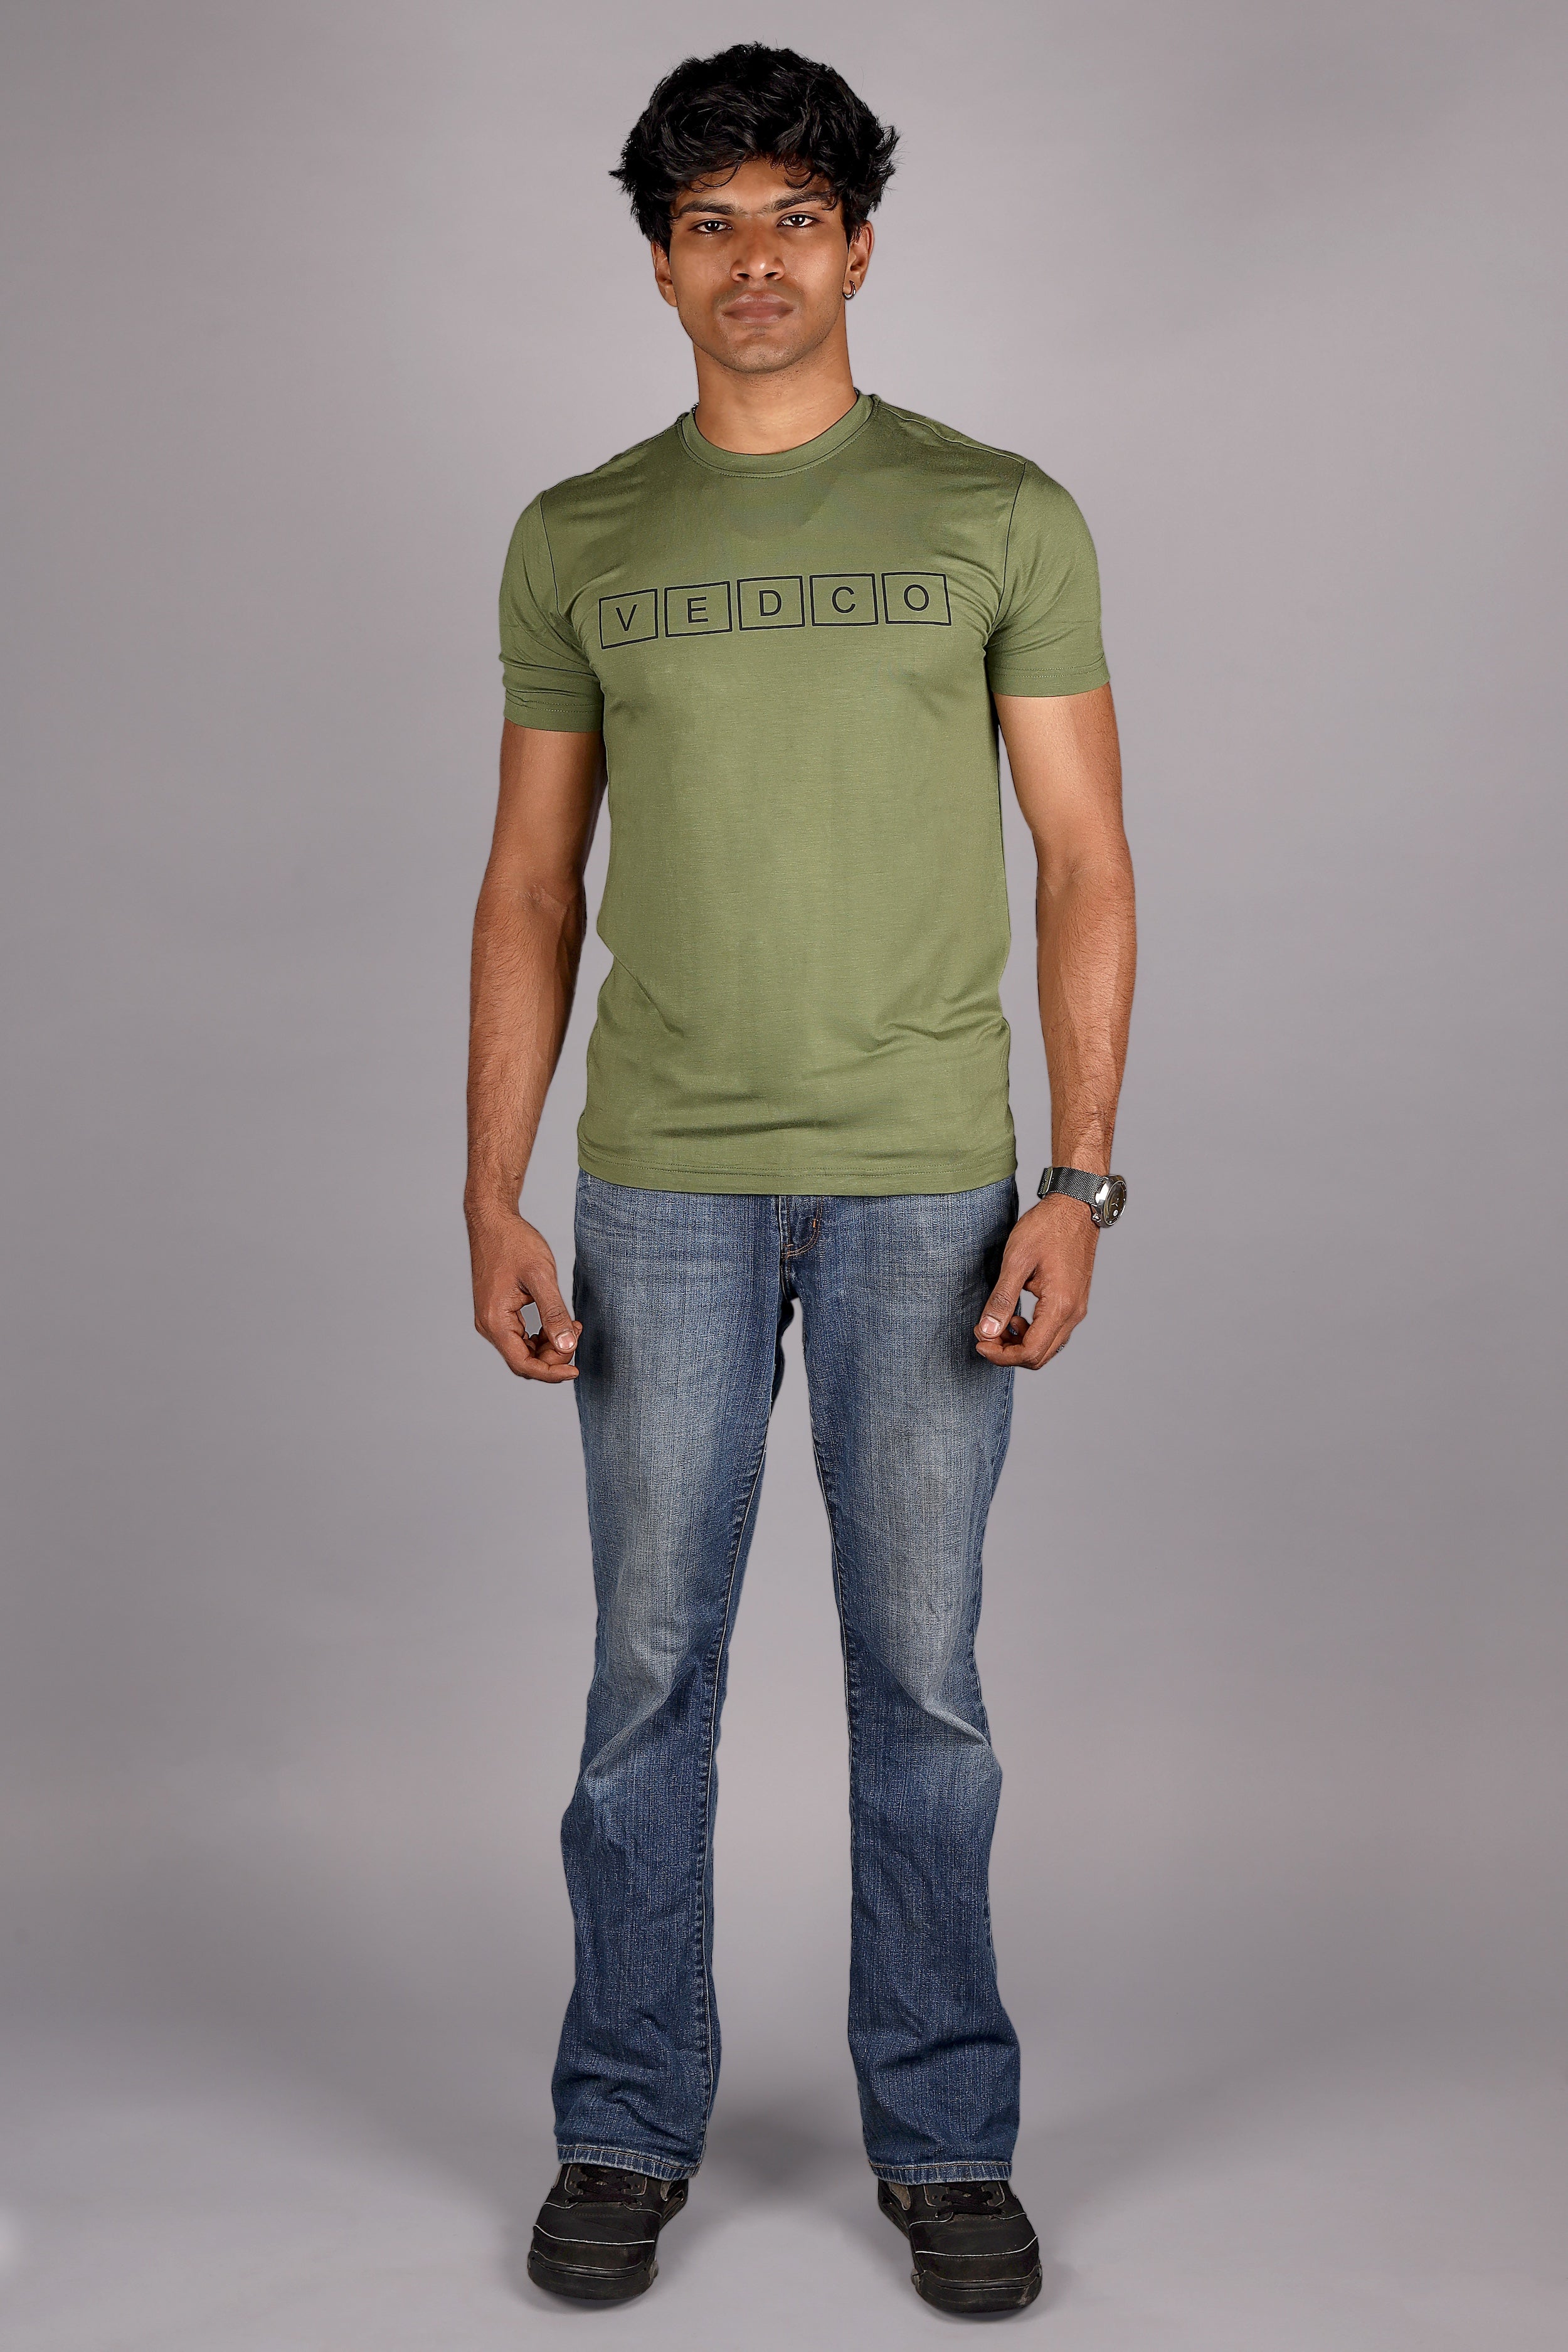 Vedco Men's Bamboo T-Shirt (Green)